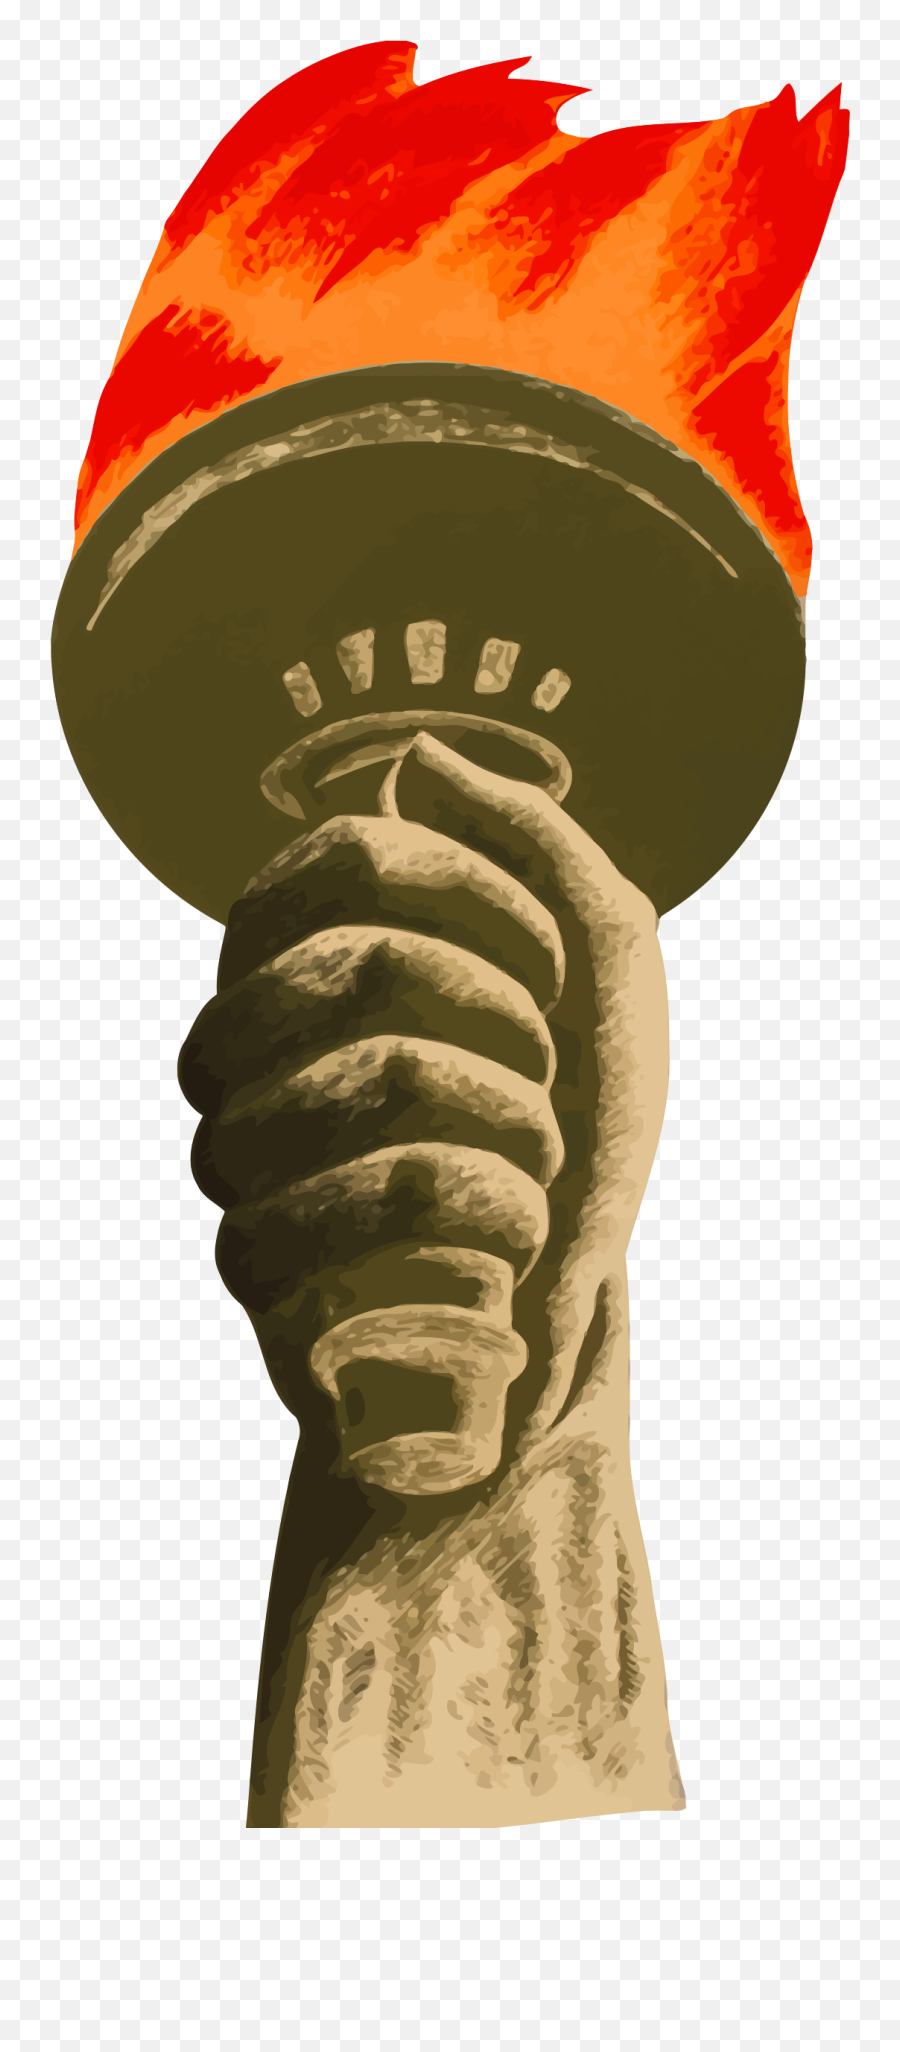 Democracy Torch Vector Clipart Image - Wpa Works Progress Administration Dibujos Emoji,Gun Star Emoji